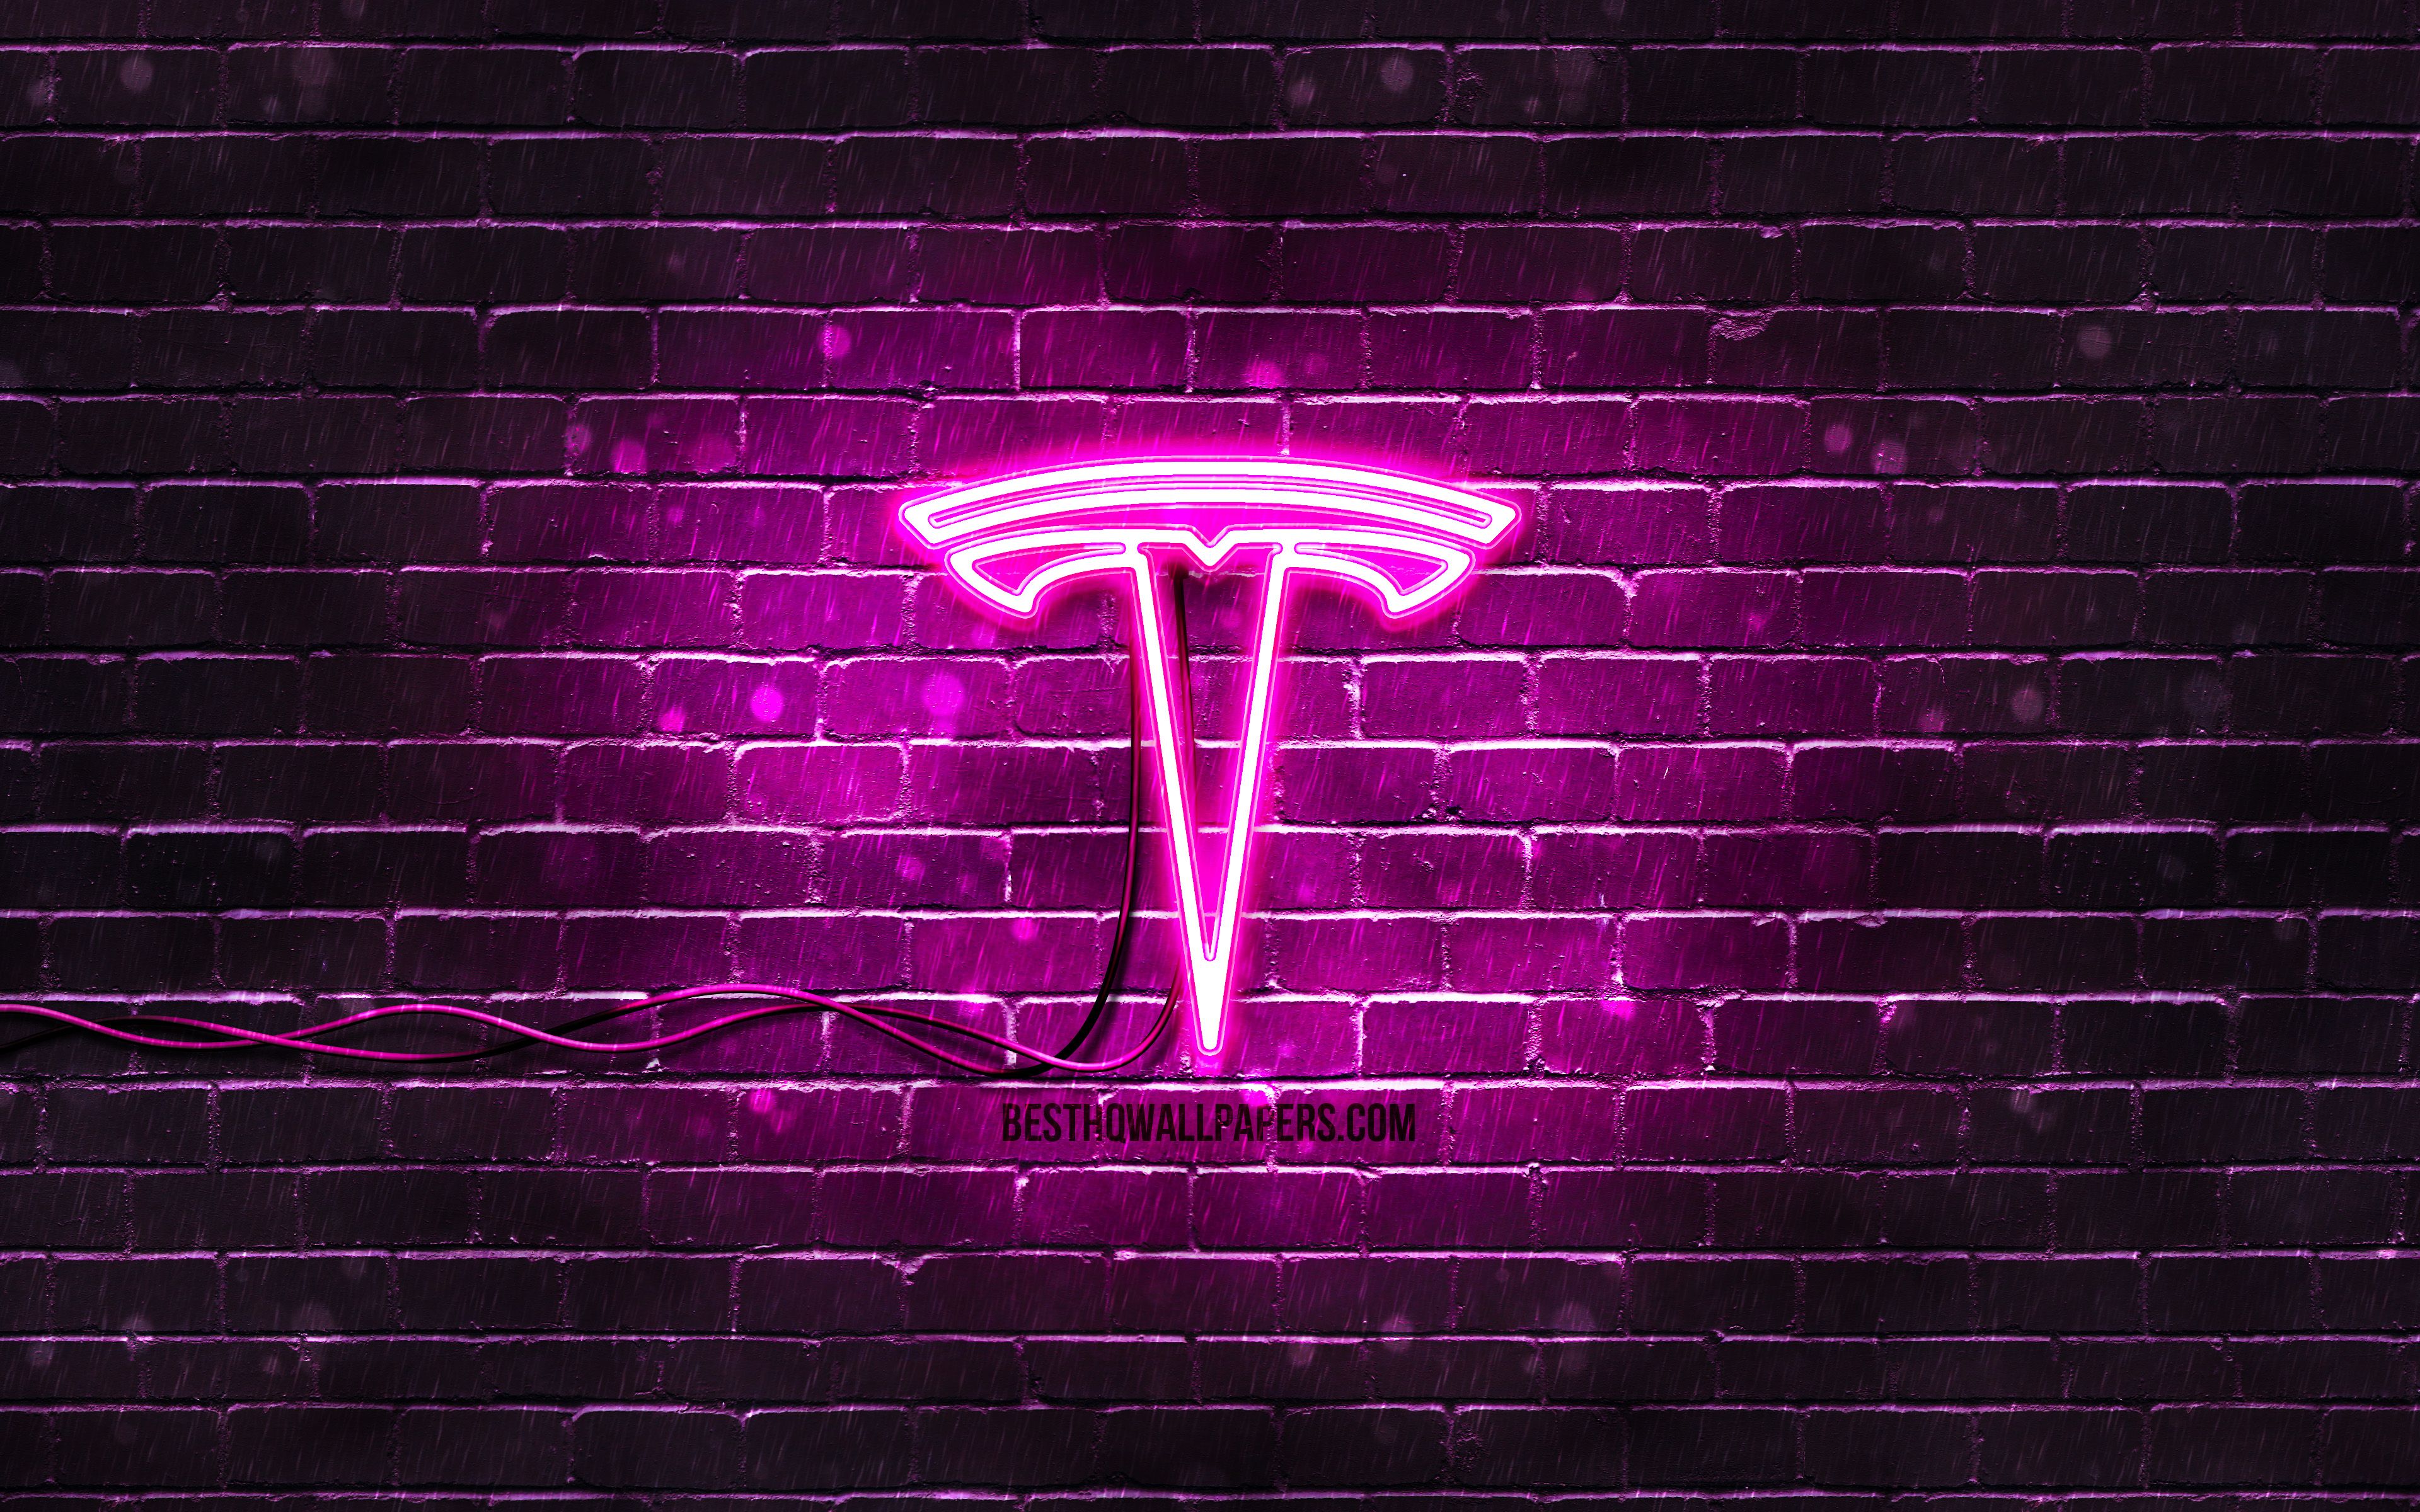 Tesla Hintergrundbild 3840x2400. Download wallpaper Tesla purple logo, 4k, purple brickwall, Tesla logo, cars brands, Tesla neon logo, Tesla for desktop with resolution 3840x2400. High Quality HD picture wallpaper